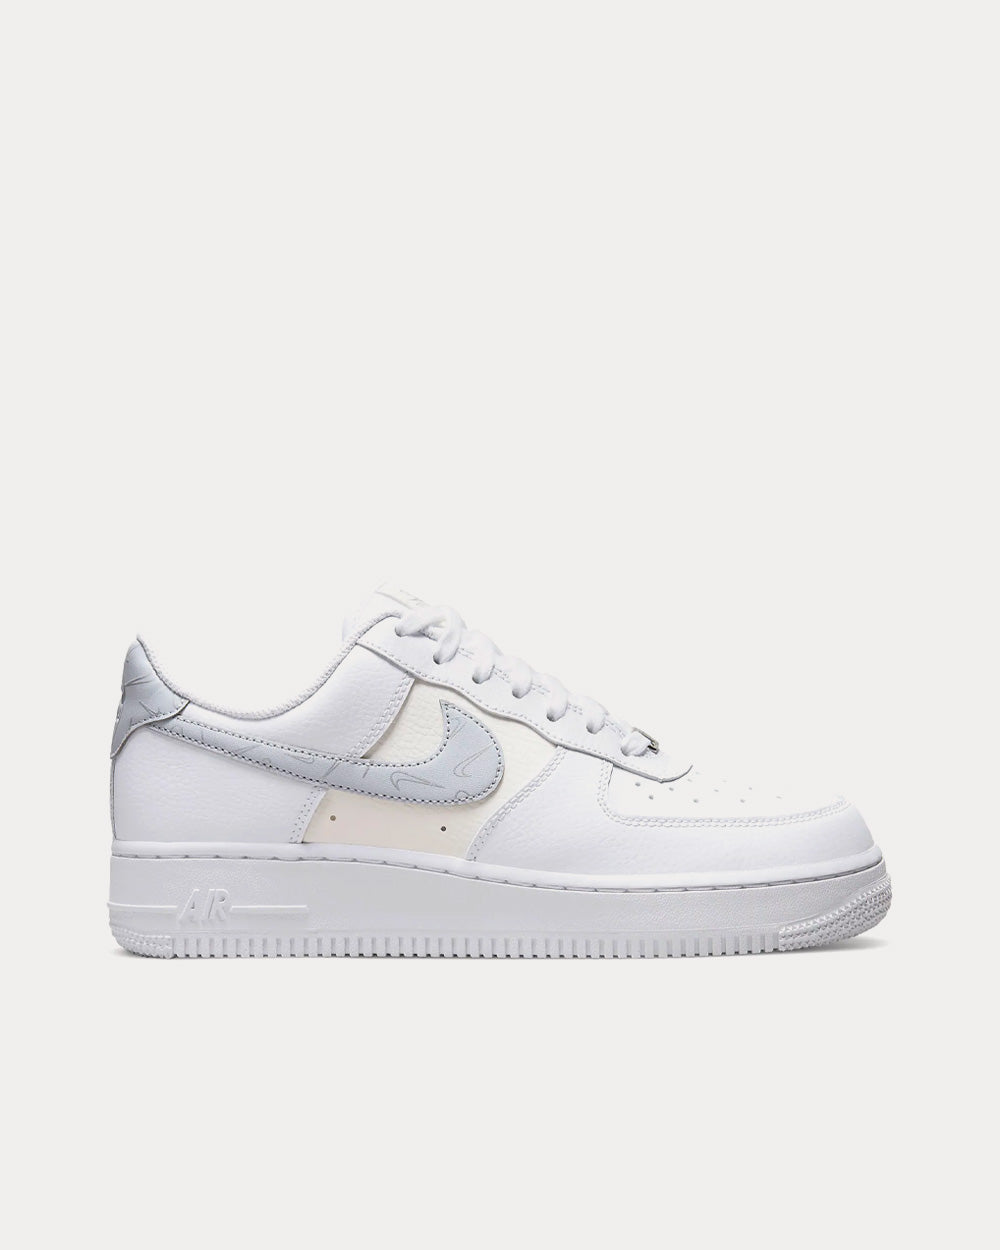 Nike Air Force 1 '07 White / / Metallic Silver / Pure Platinum Low Top Sneakers - Sneak in Peace